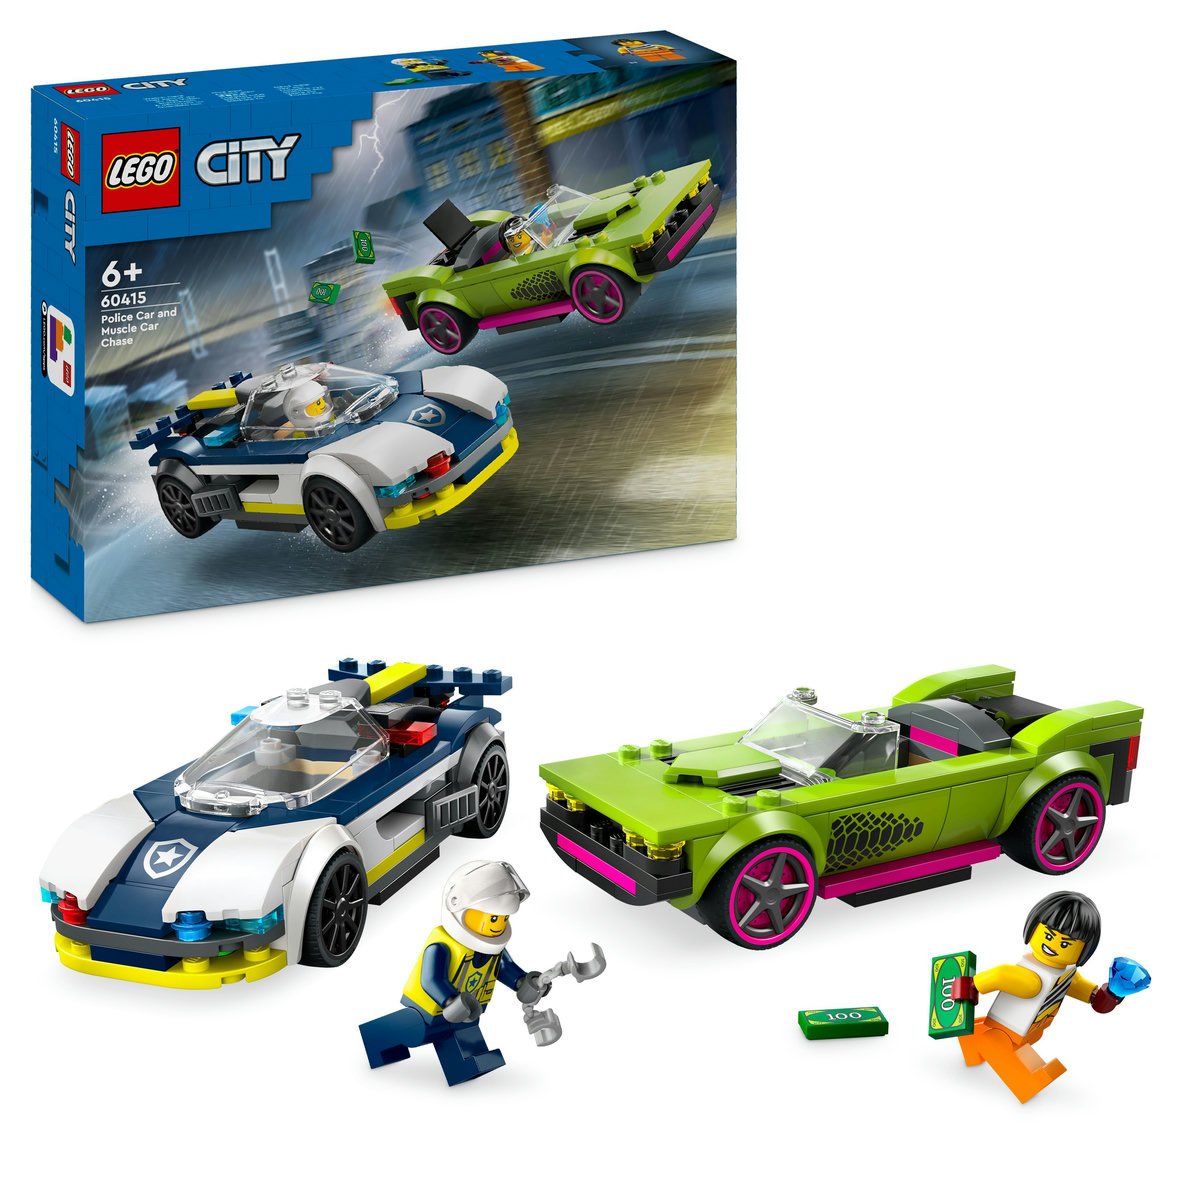 LEGO City - Masina de politie (60415) | LEGO